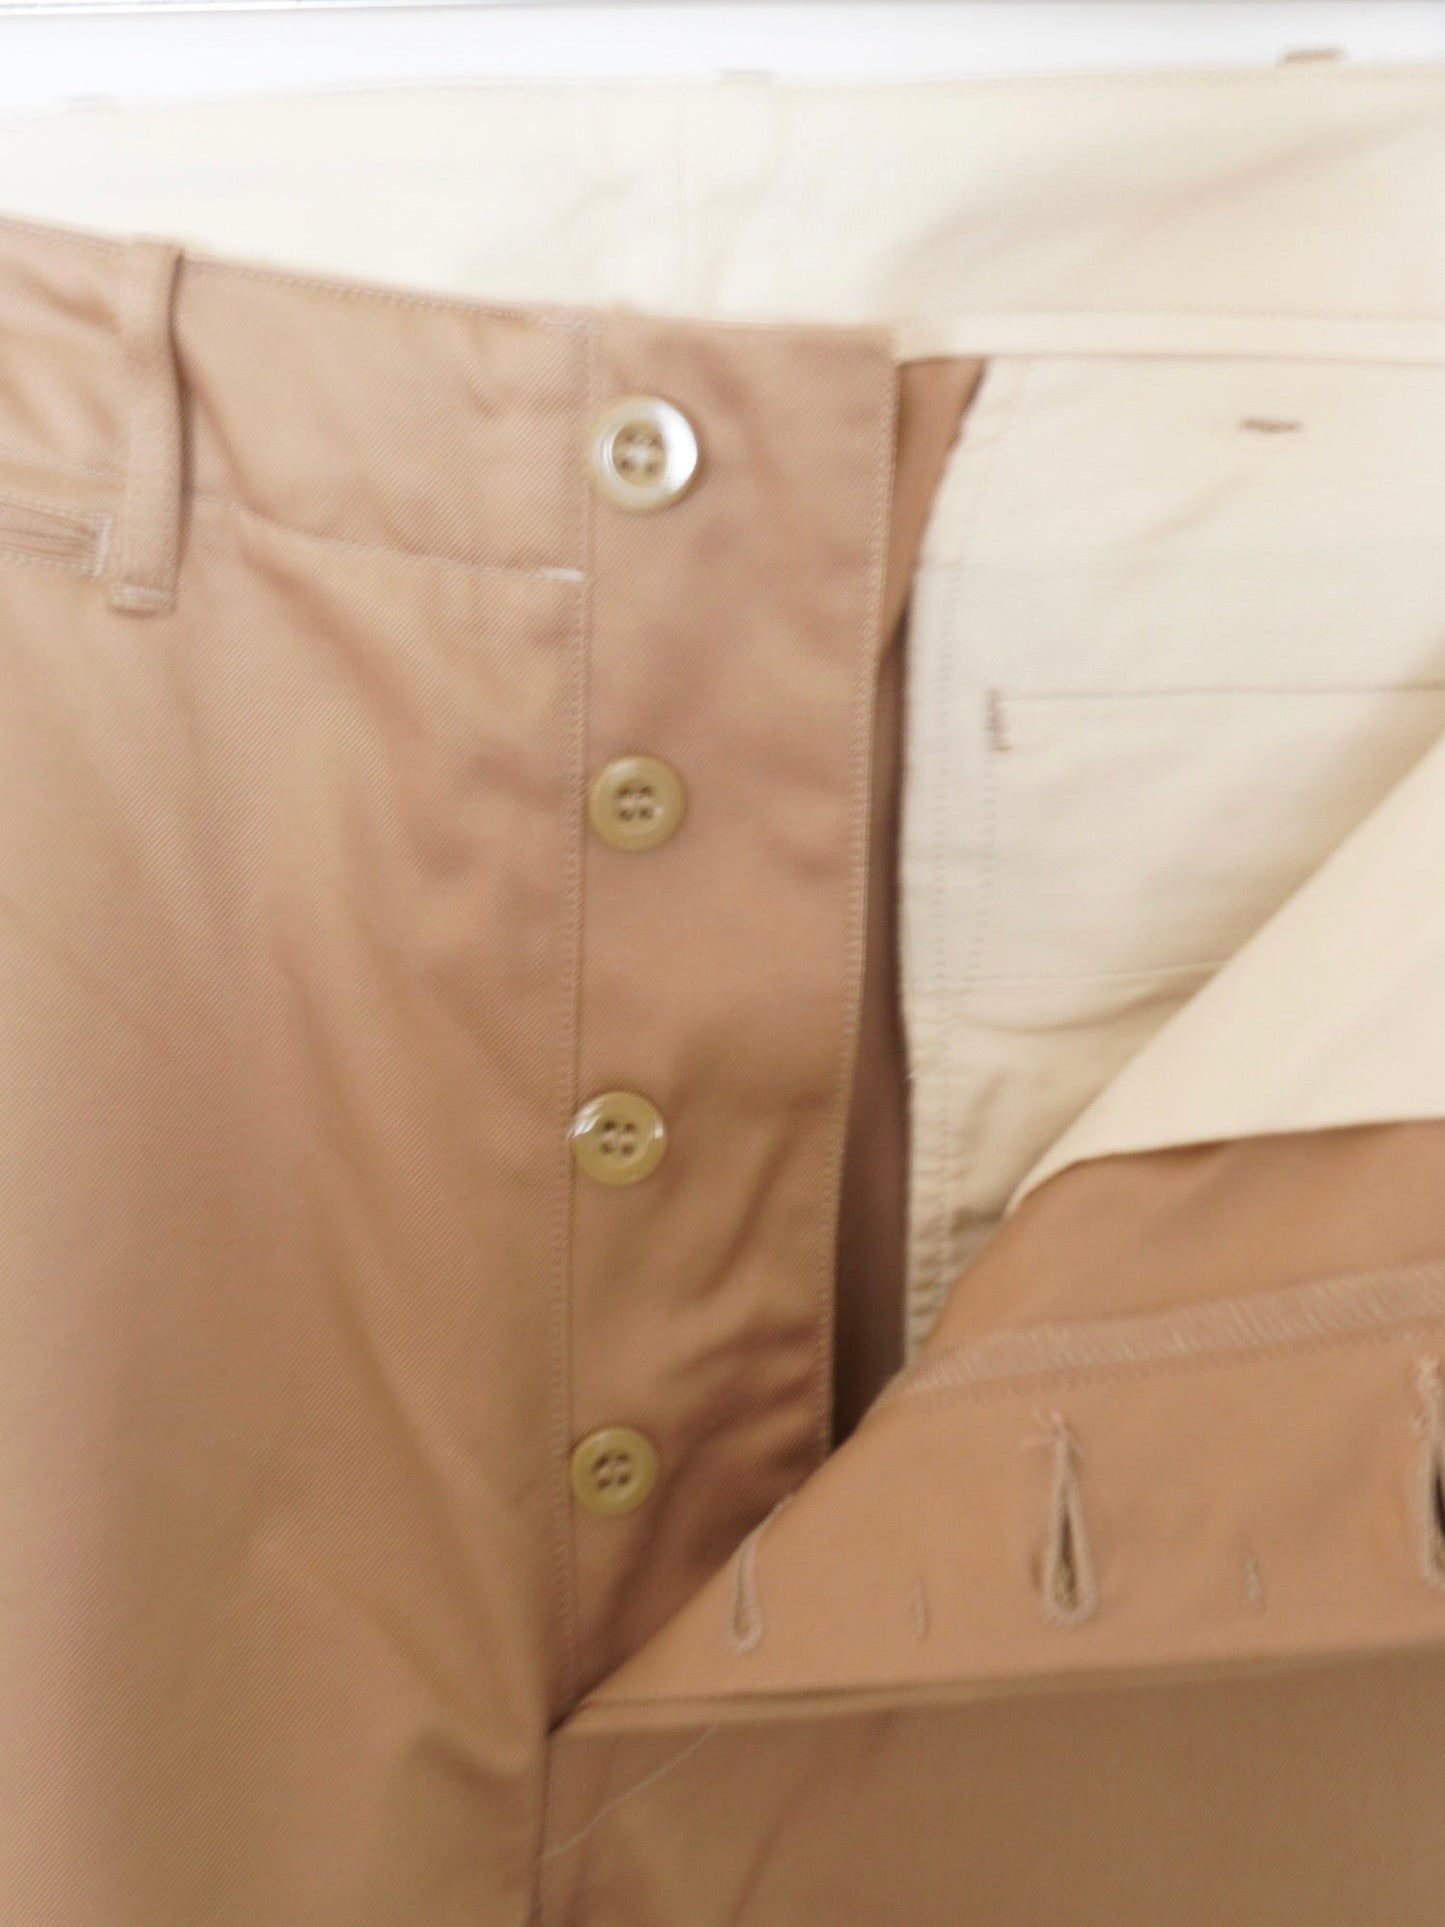 [ScyeBasics] San Joaquin Cotton Chino 41Khaki Trousers パンツ - #shop_name #アパルティール# #名古屋# #セレクトショップ#